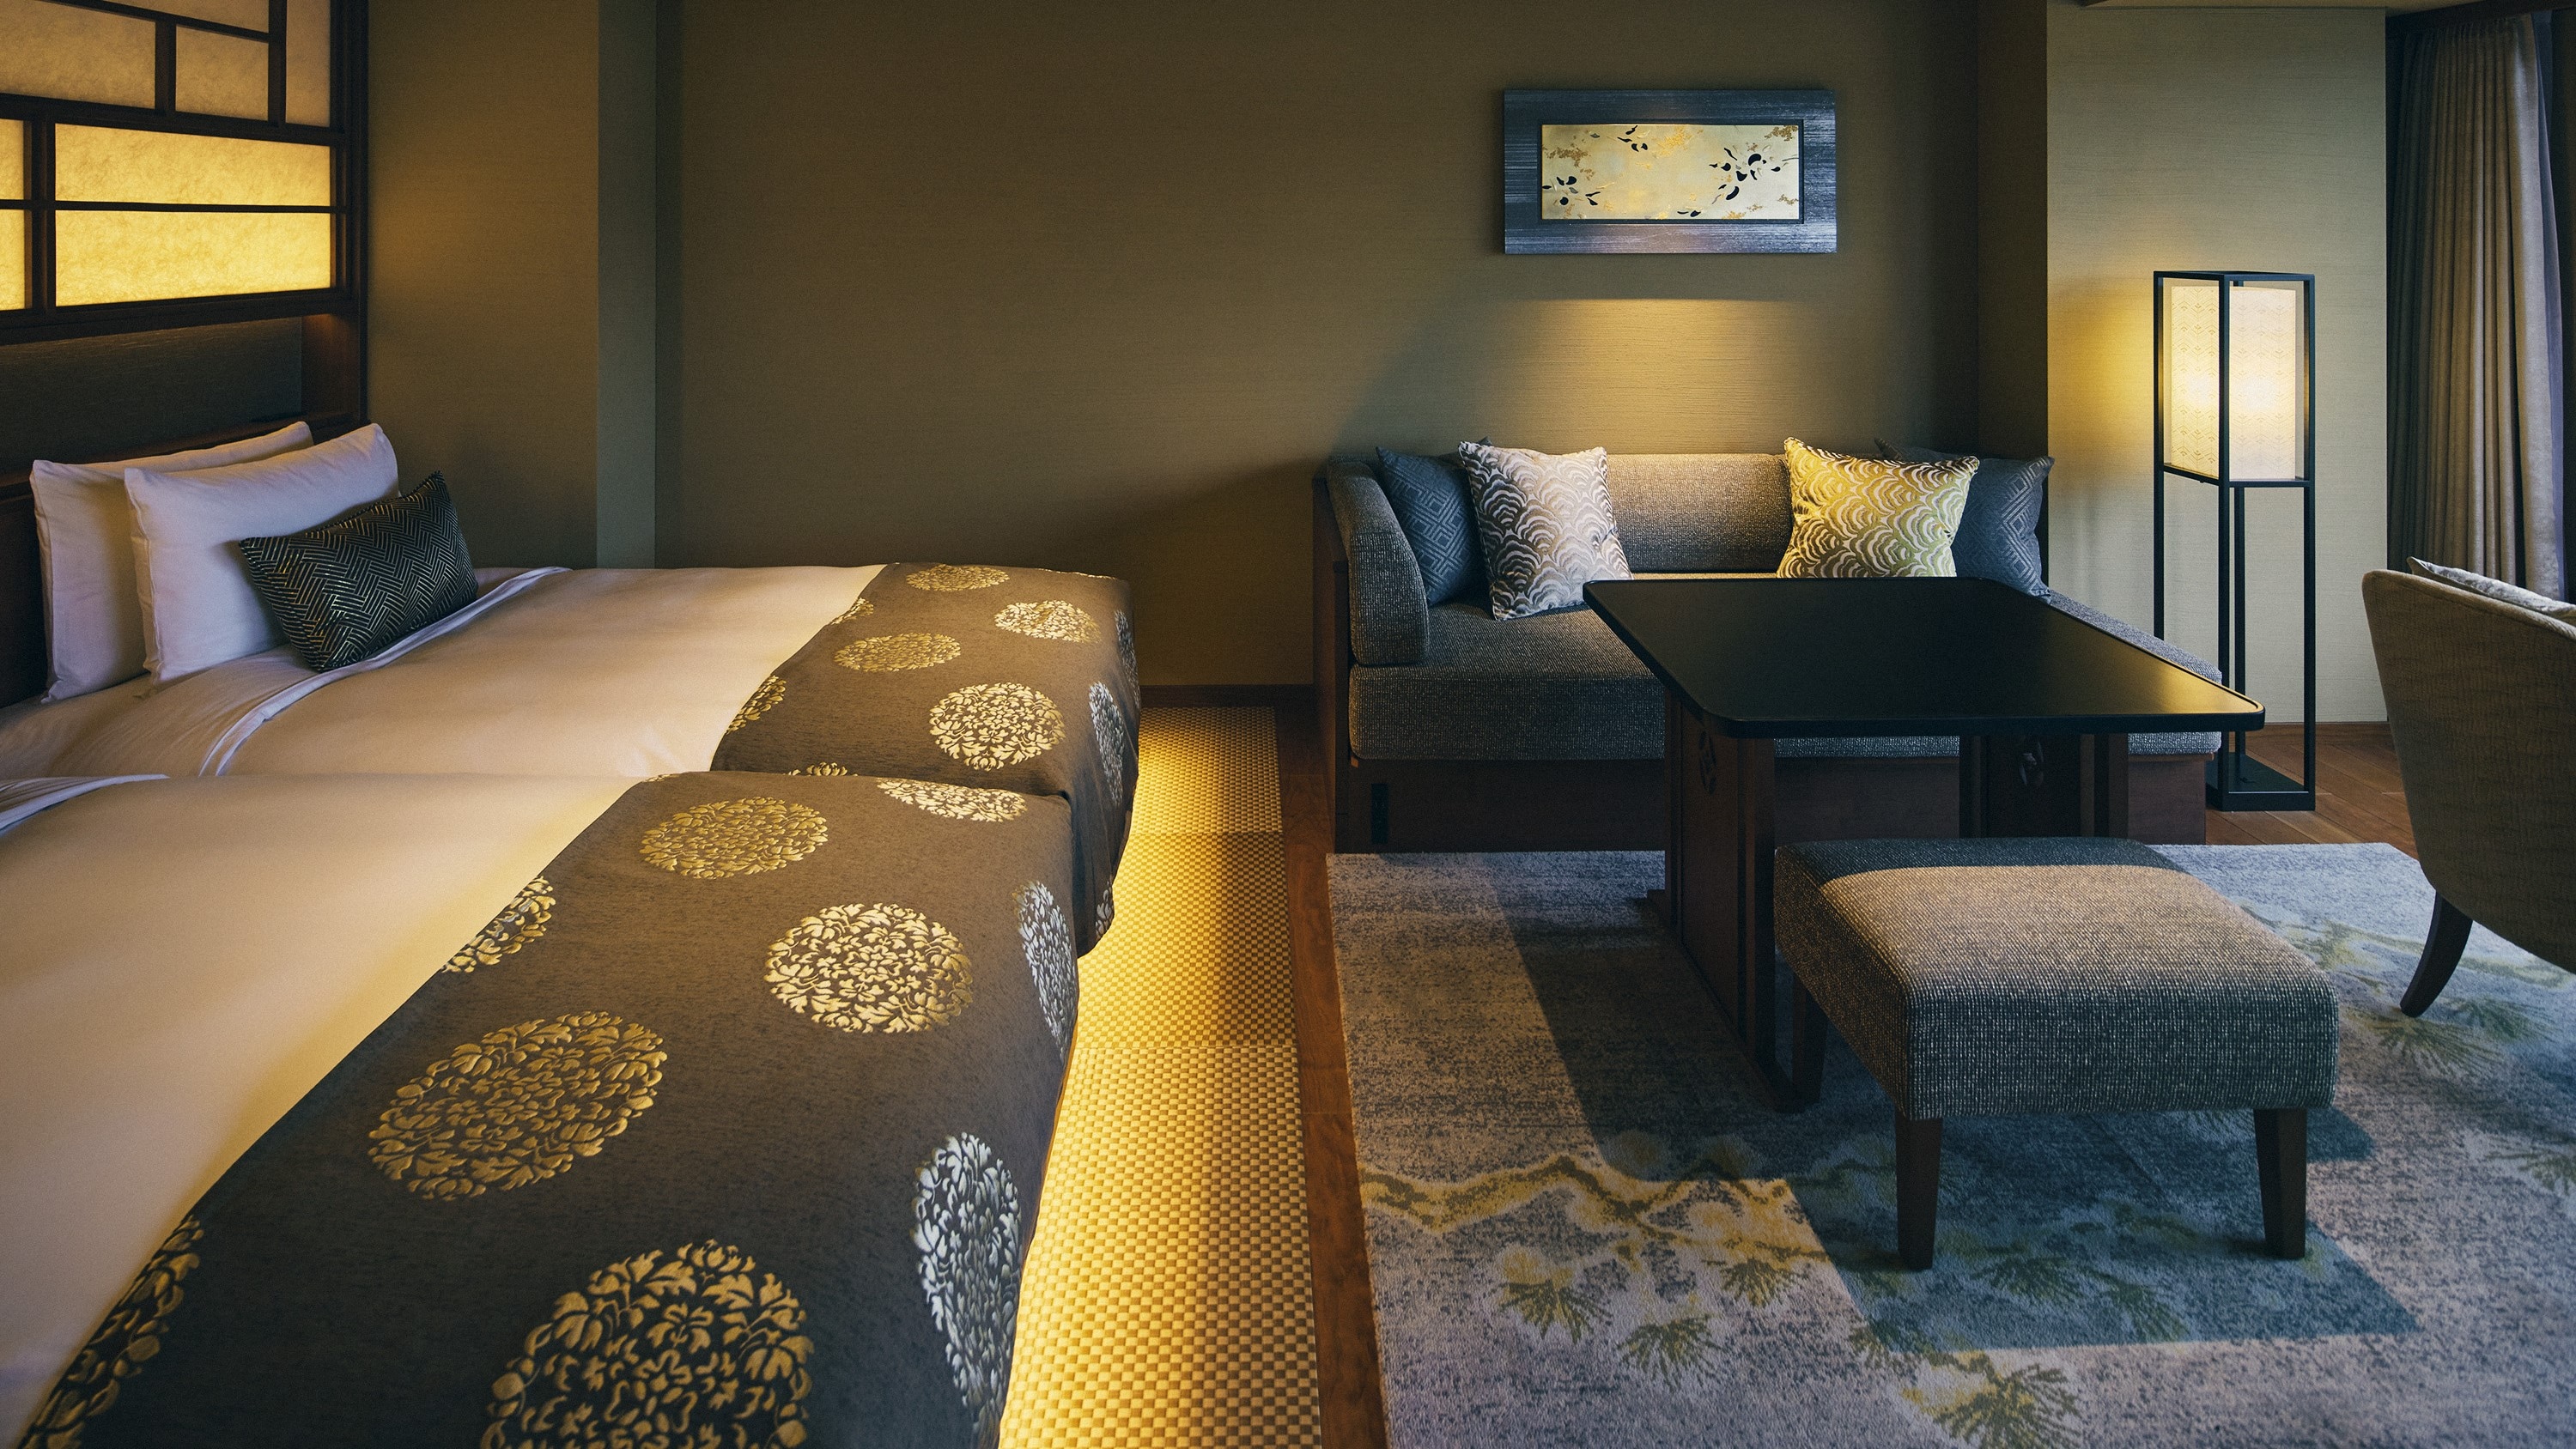 Miyabi Precious Twin: Enjoy an elegant stay in a space full of high-quality Japanese furnishings